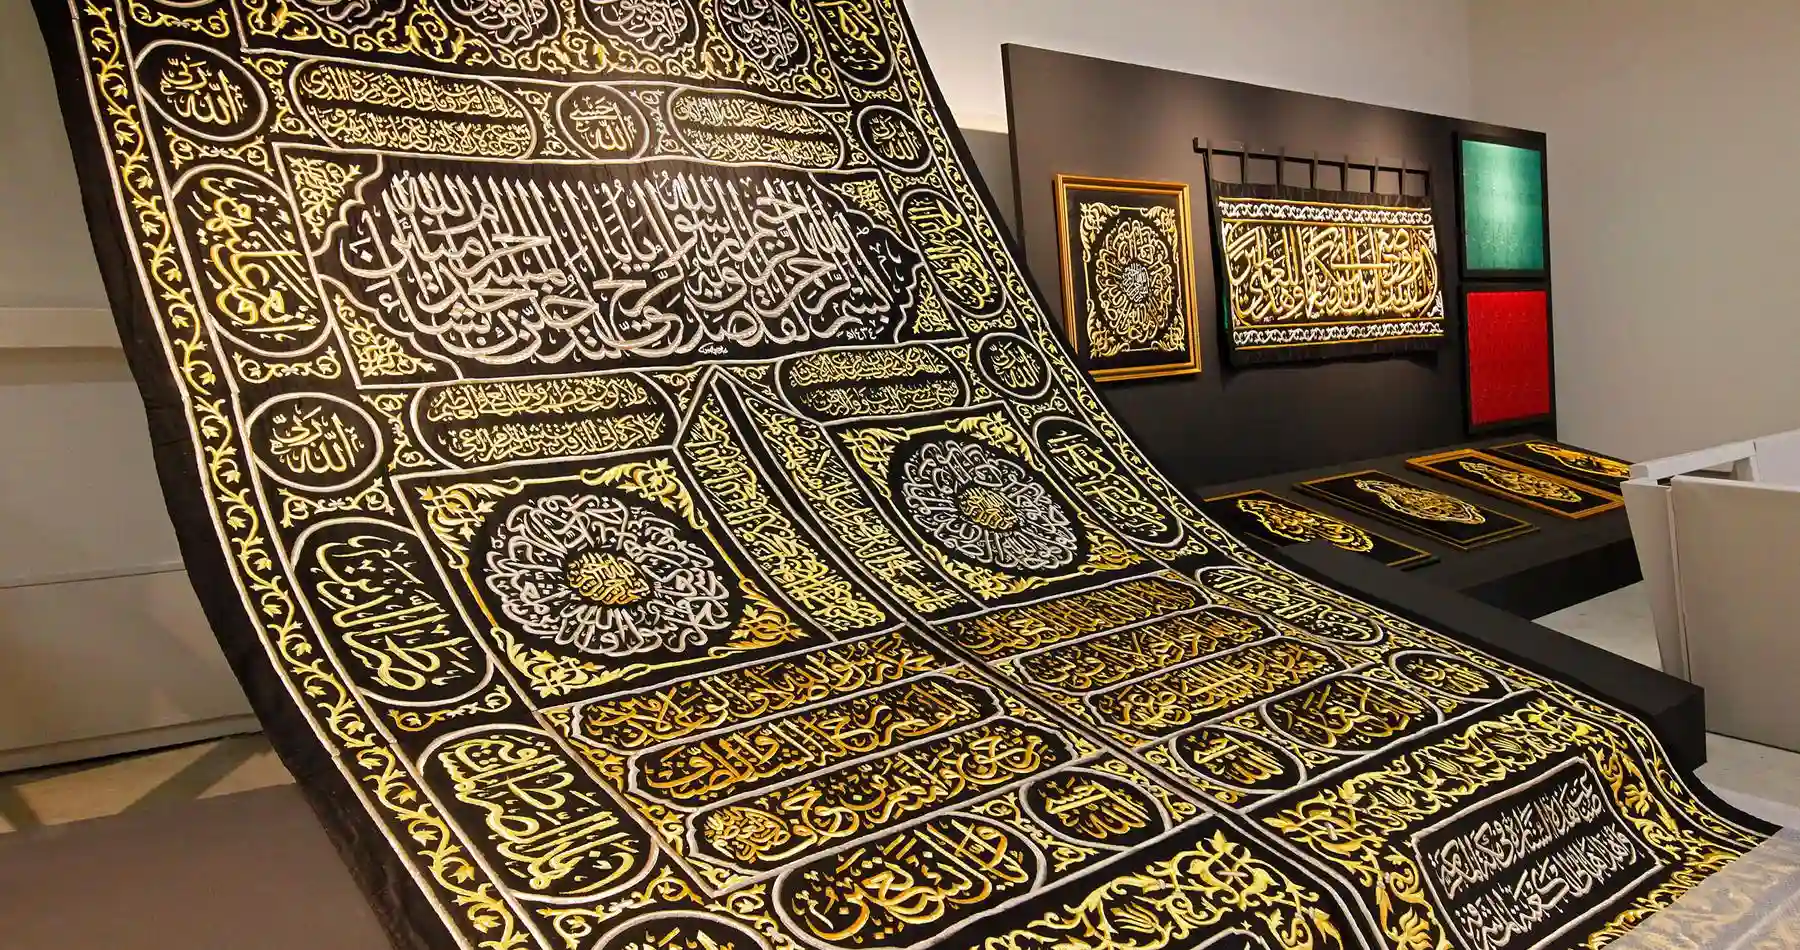 Abbildung-Vorhang-der Kaaba-IISW